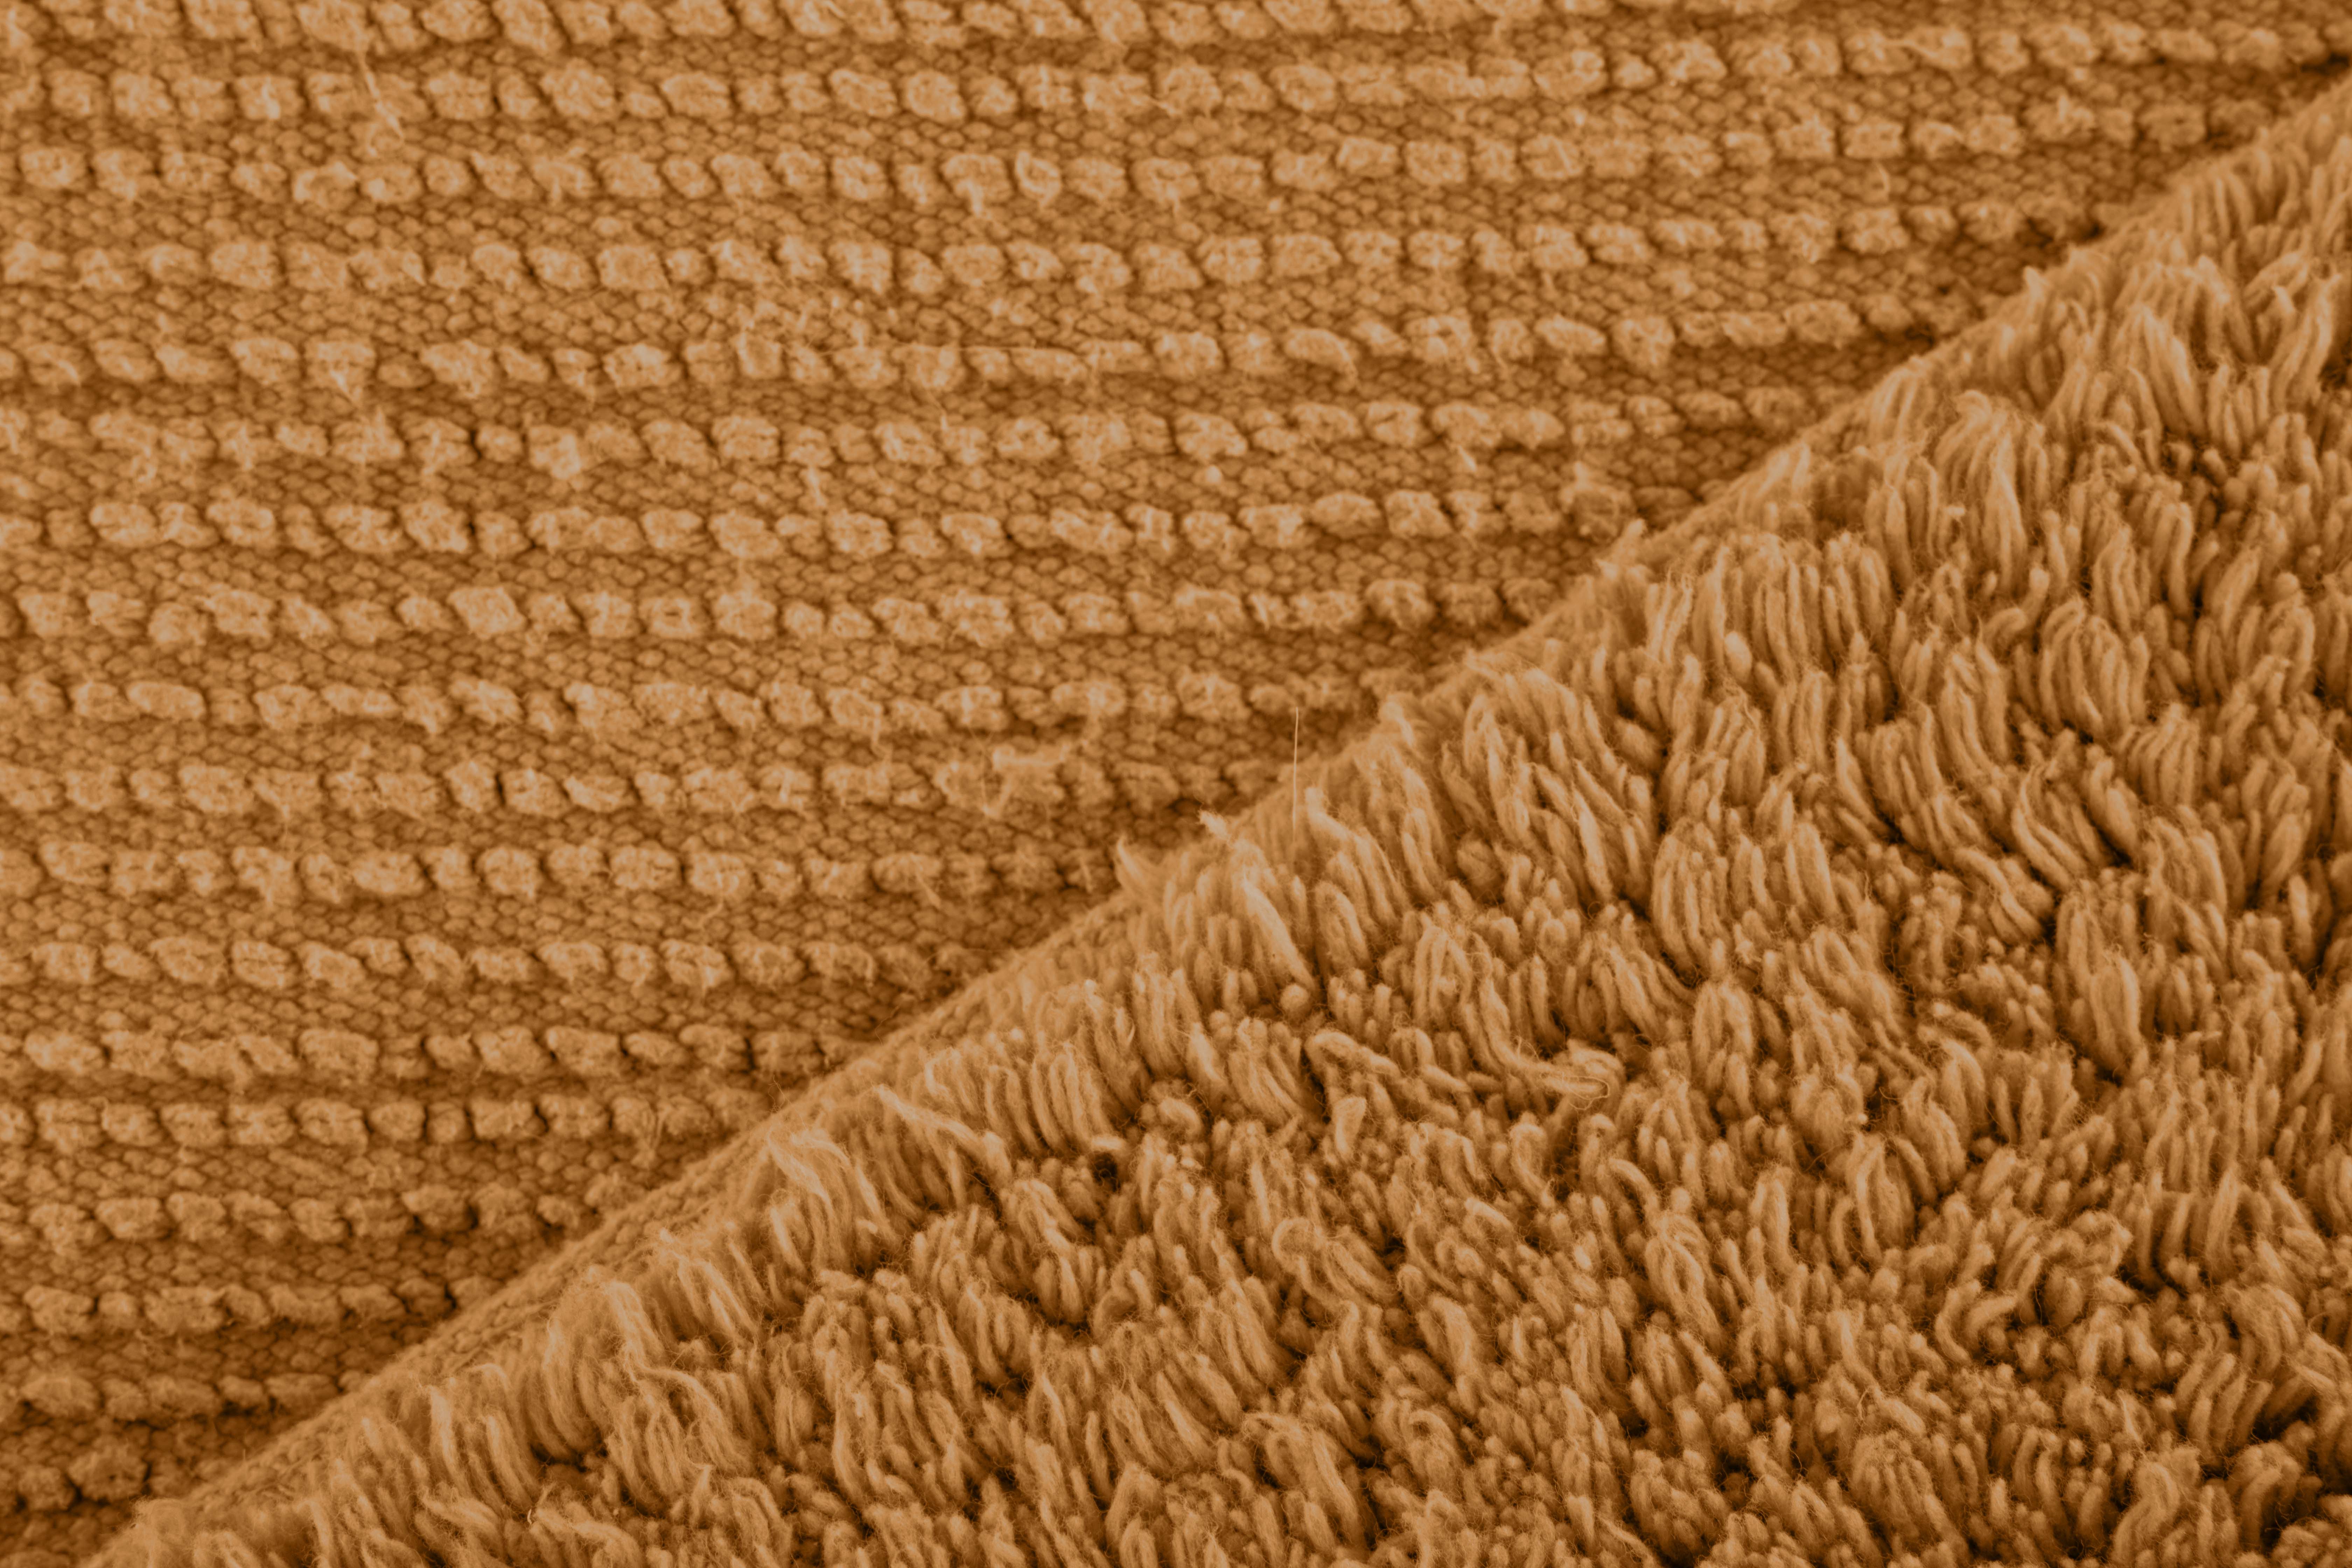 RIVA tapis de bain - coton antidérapant, 60x60cm, indian tan